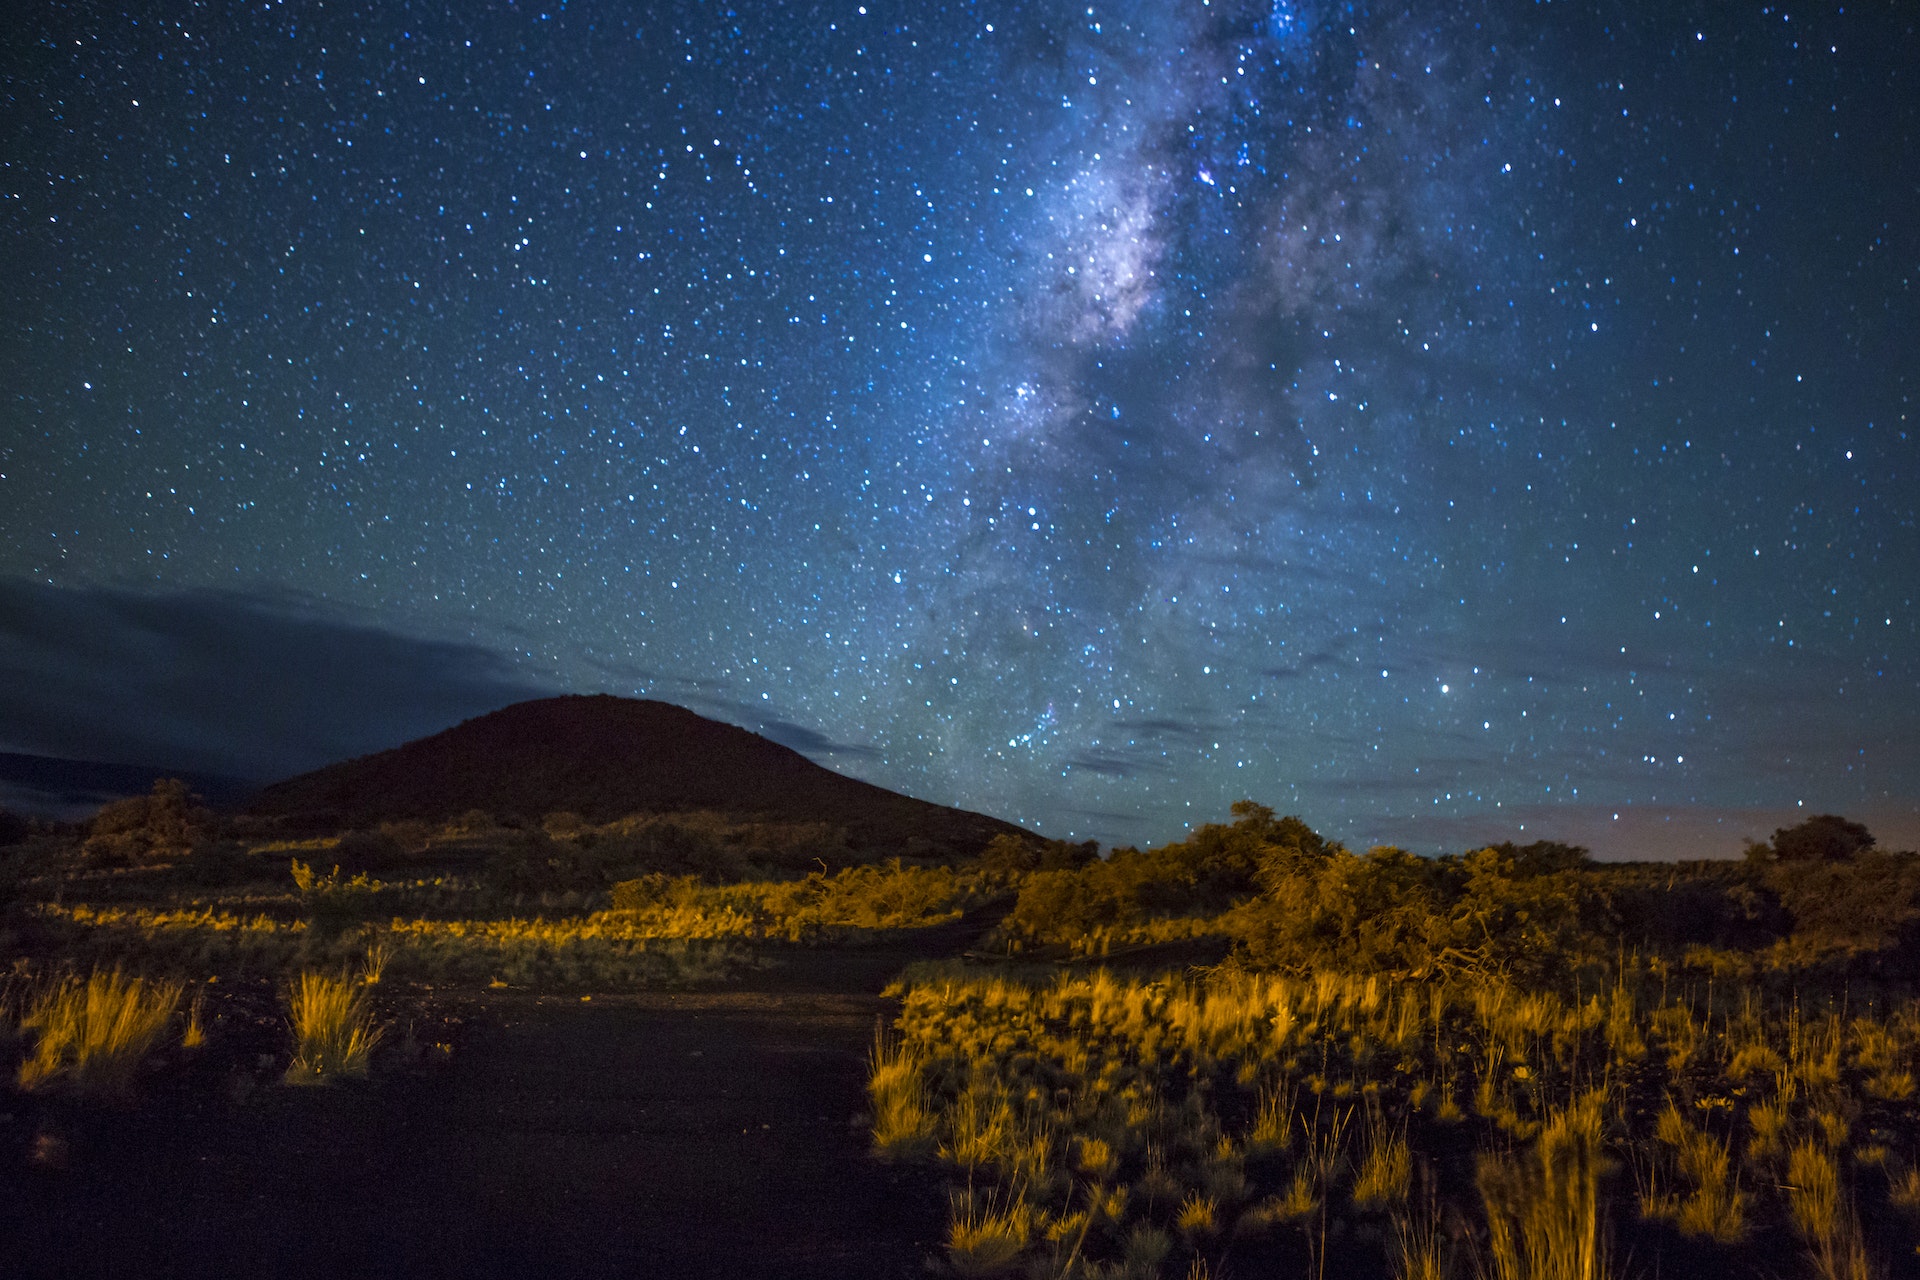 A night trail scene on Hawaii's Mauna Kea volcano